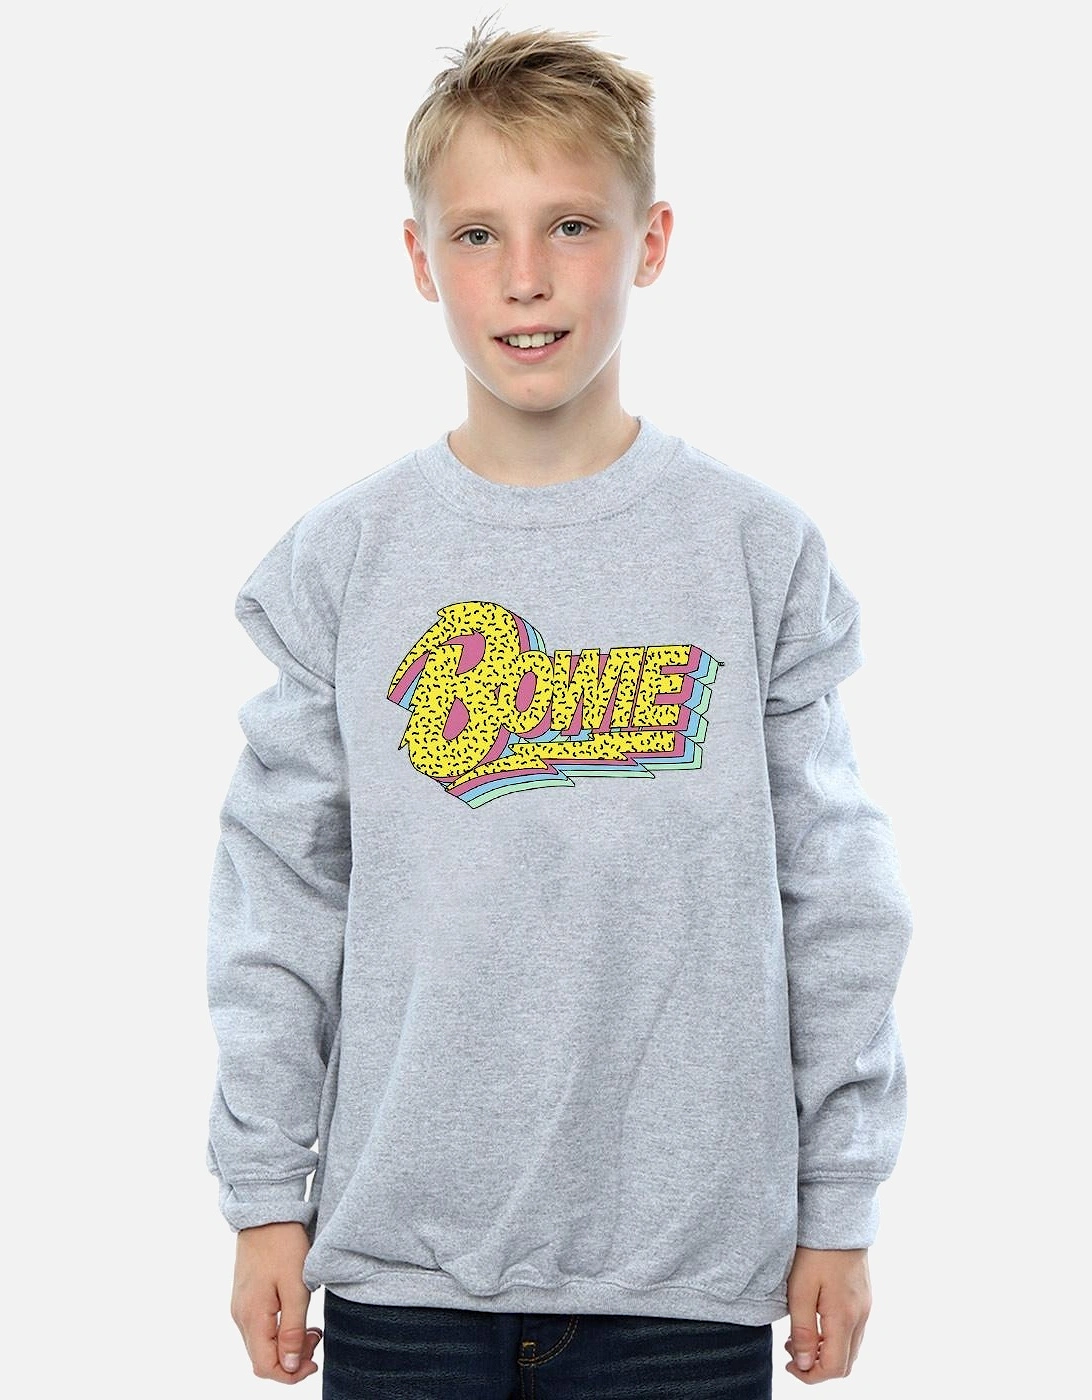 Boys Moonlight 90s Logo Sweatshirt